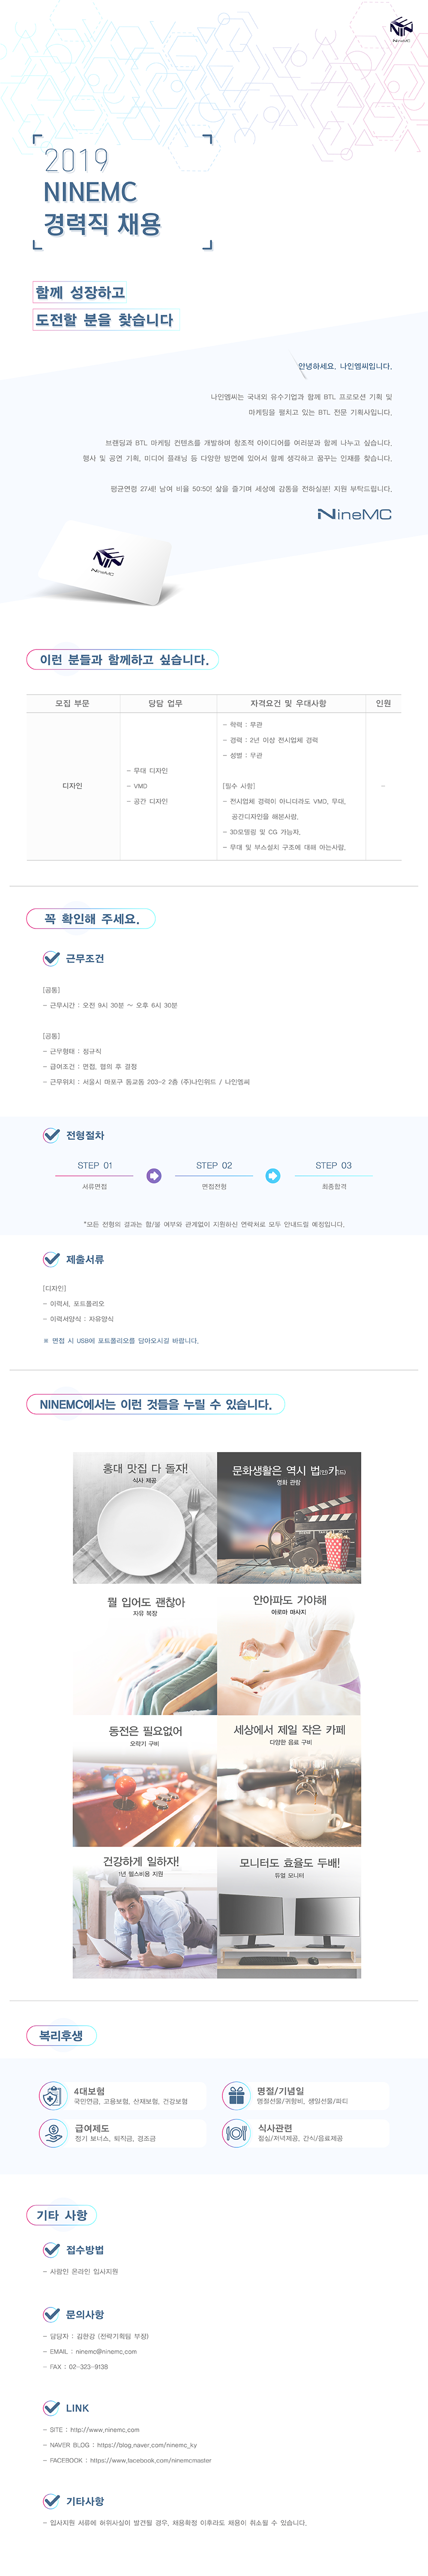 2019 NINEMC 디자인팀 신입/경력 채용